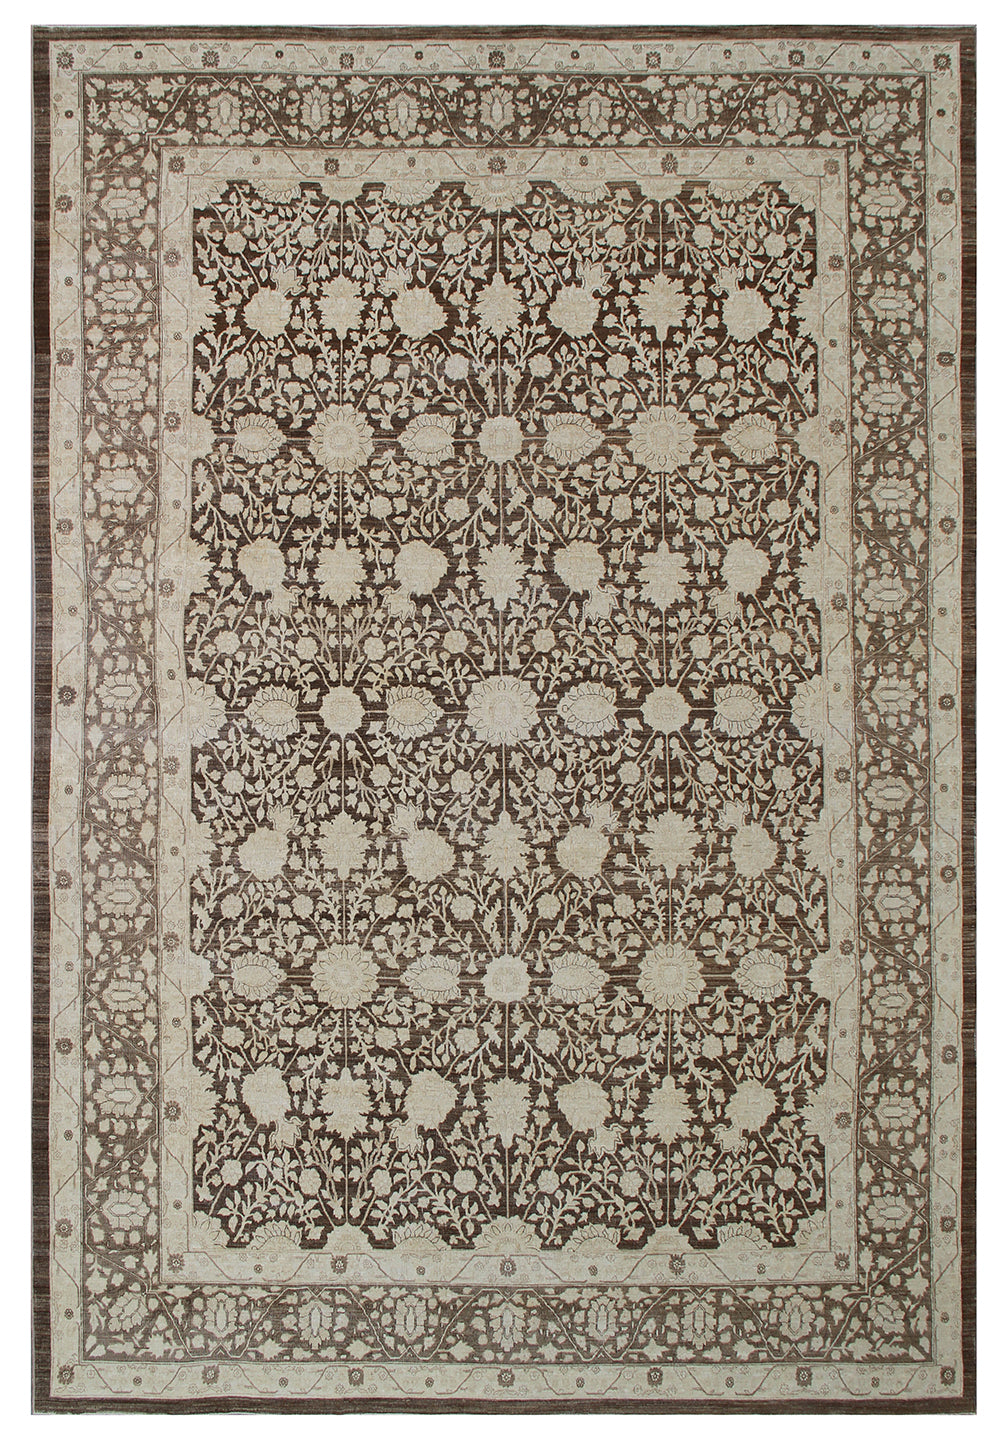 10'x14' Very Fine Tabriz Design Ariana Traditional Rug